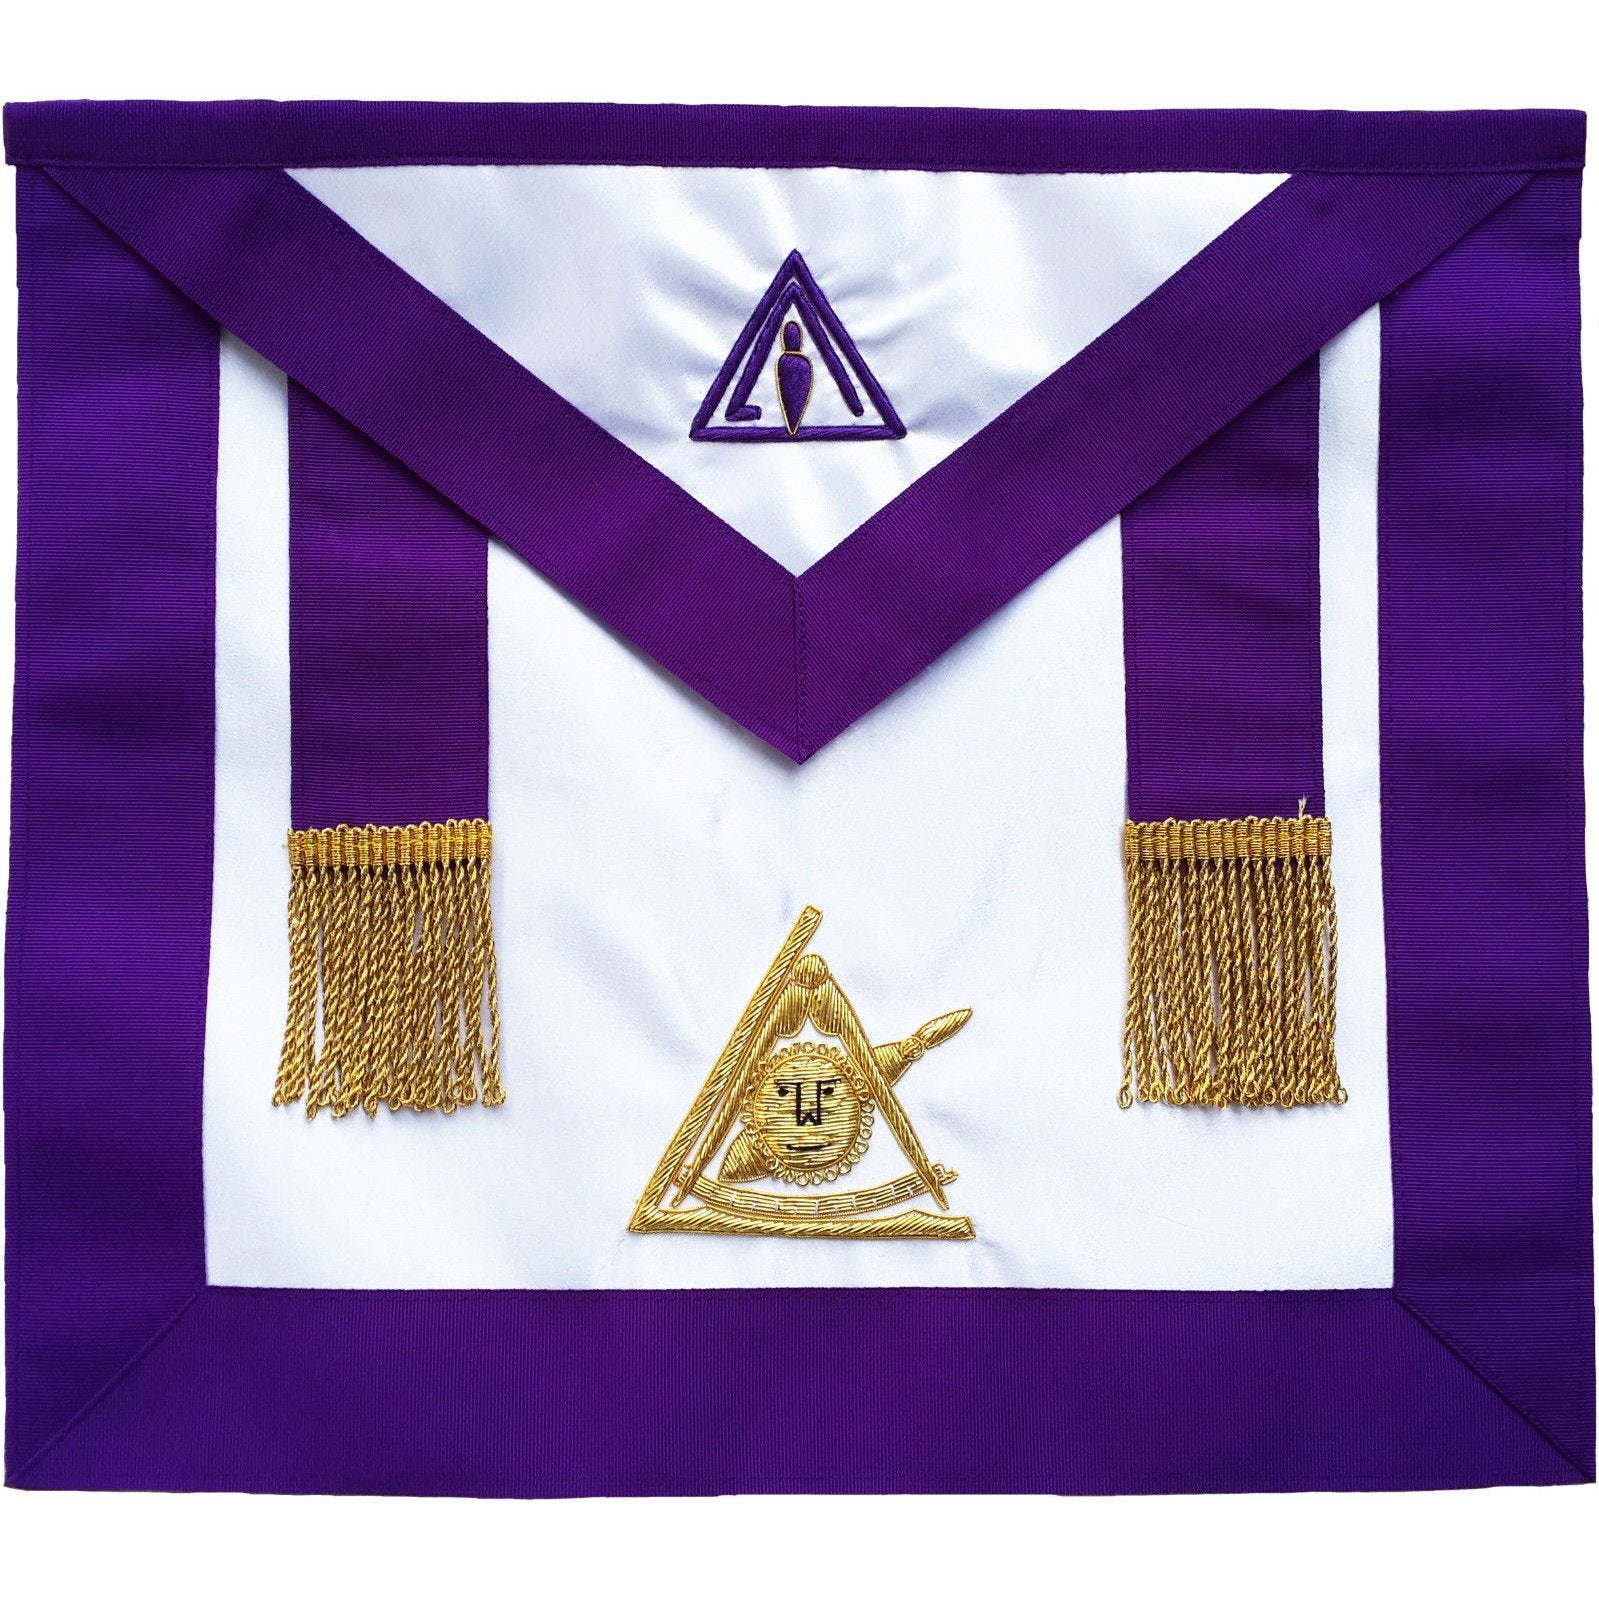 Past Illustrious Master Council Apron - Purple Grosgrain with Golden Fringe Tassels - Bricks Masons